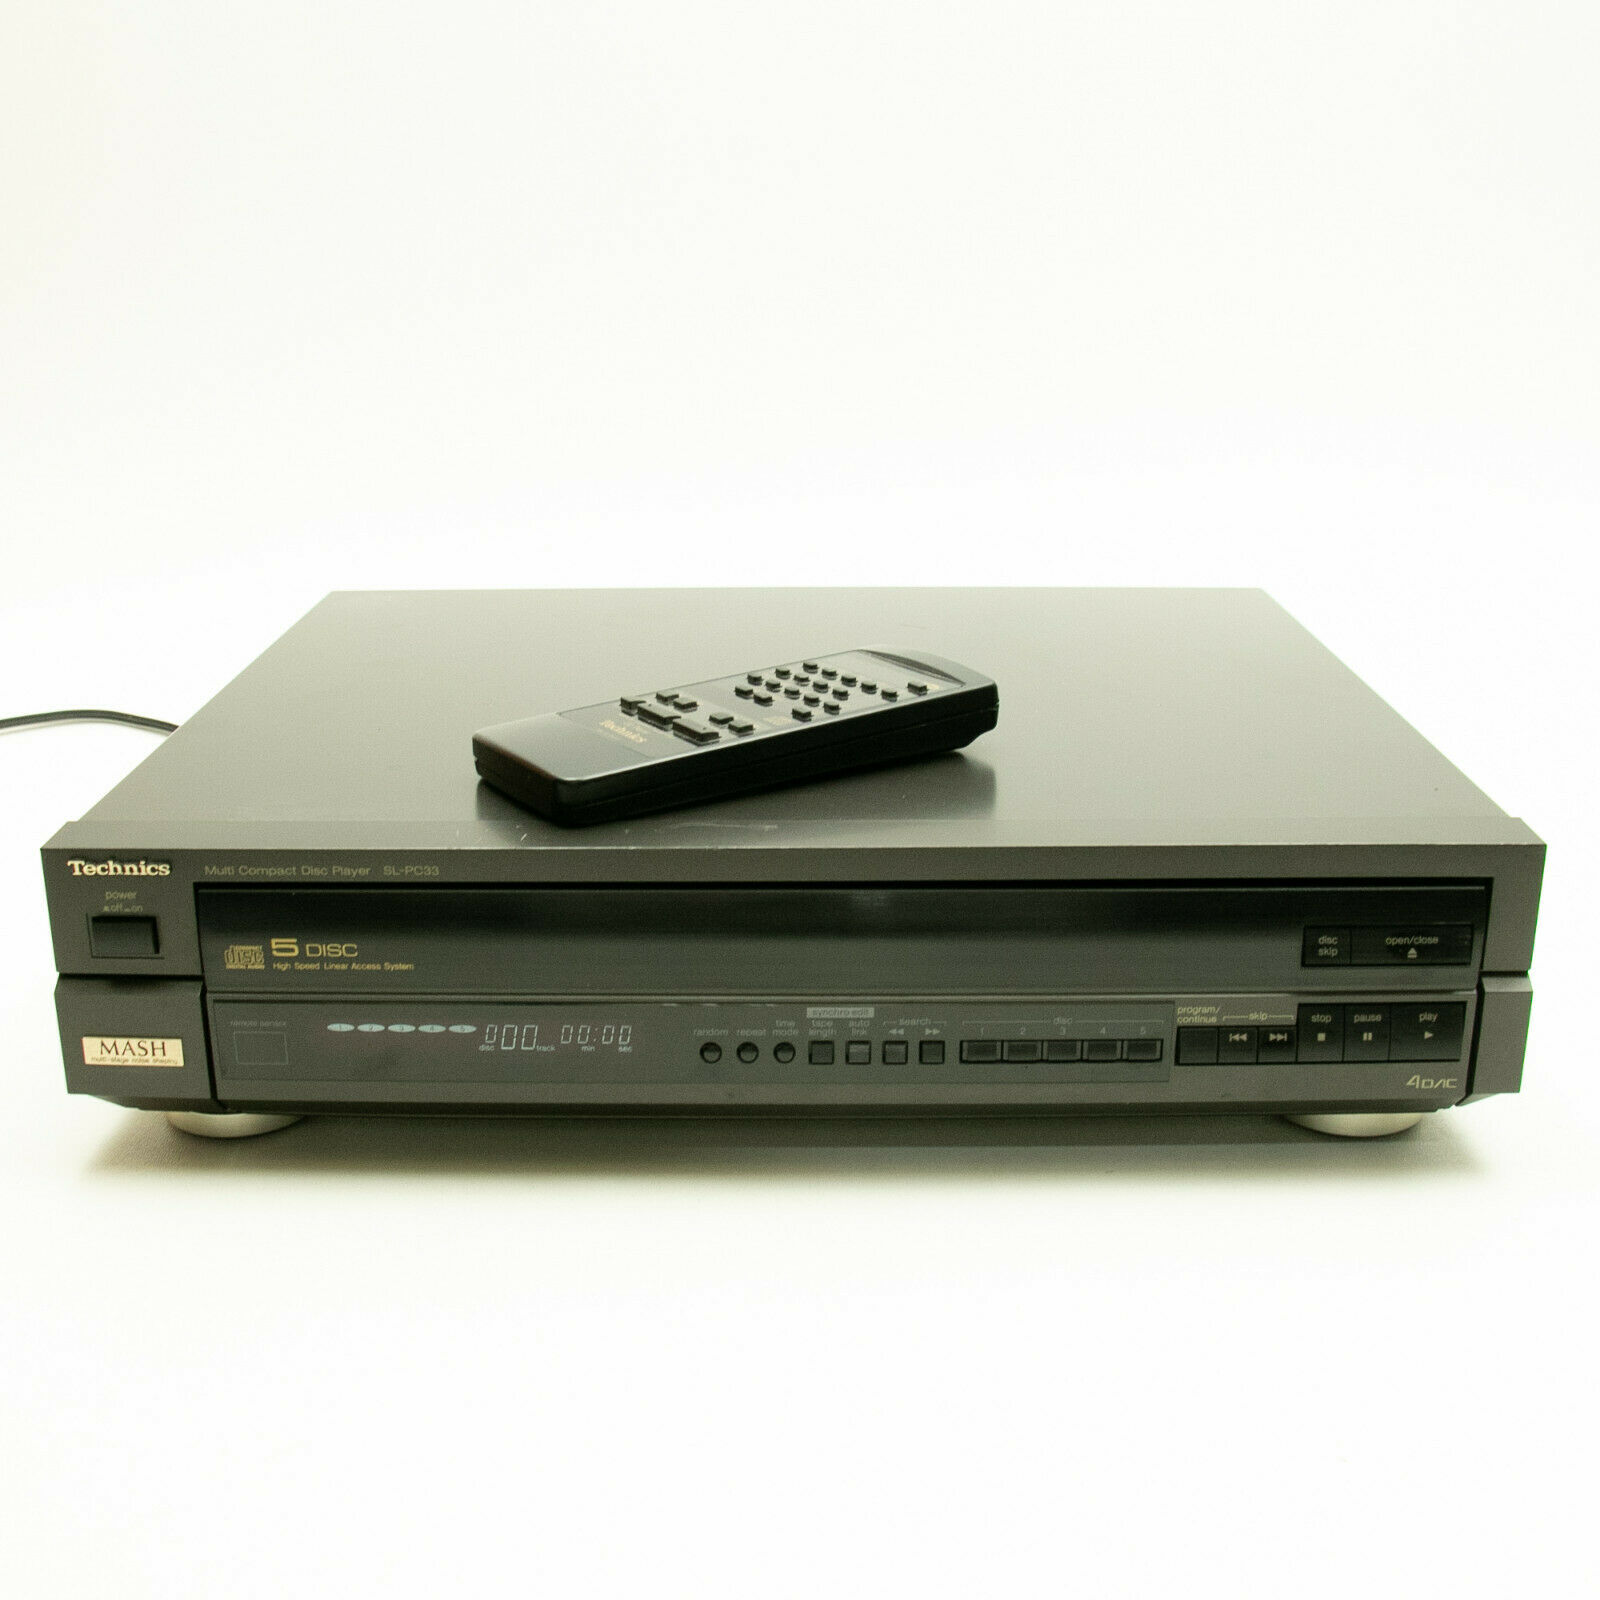 Technics Japan MASH Slim 5 Disc CD Player Changer SL-PC33 Vintage 1990 w/ Remote